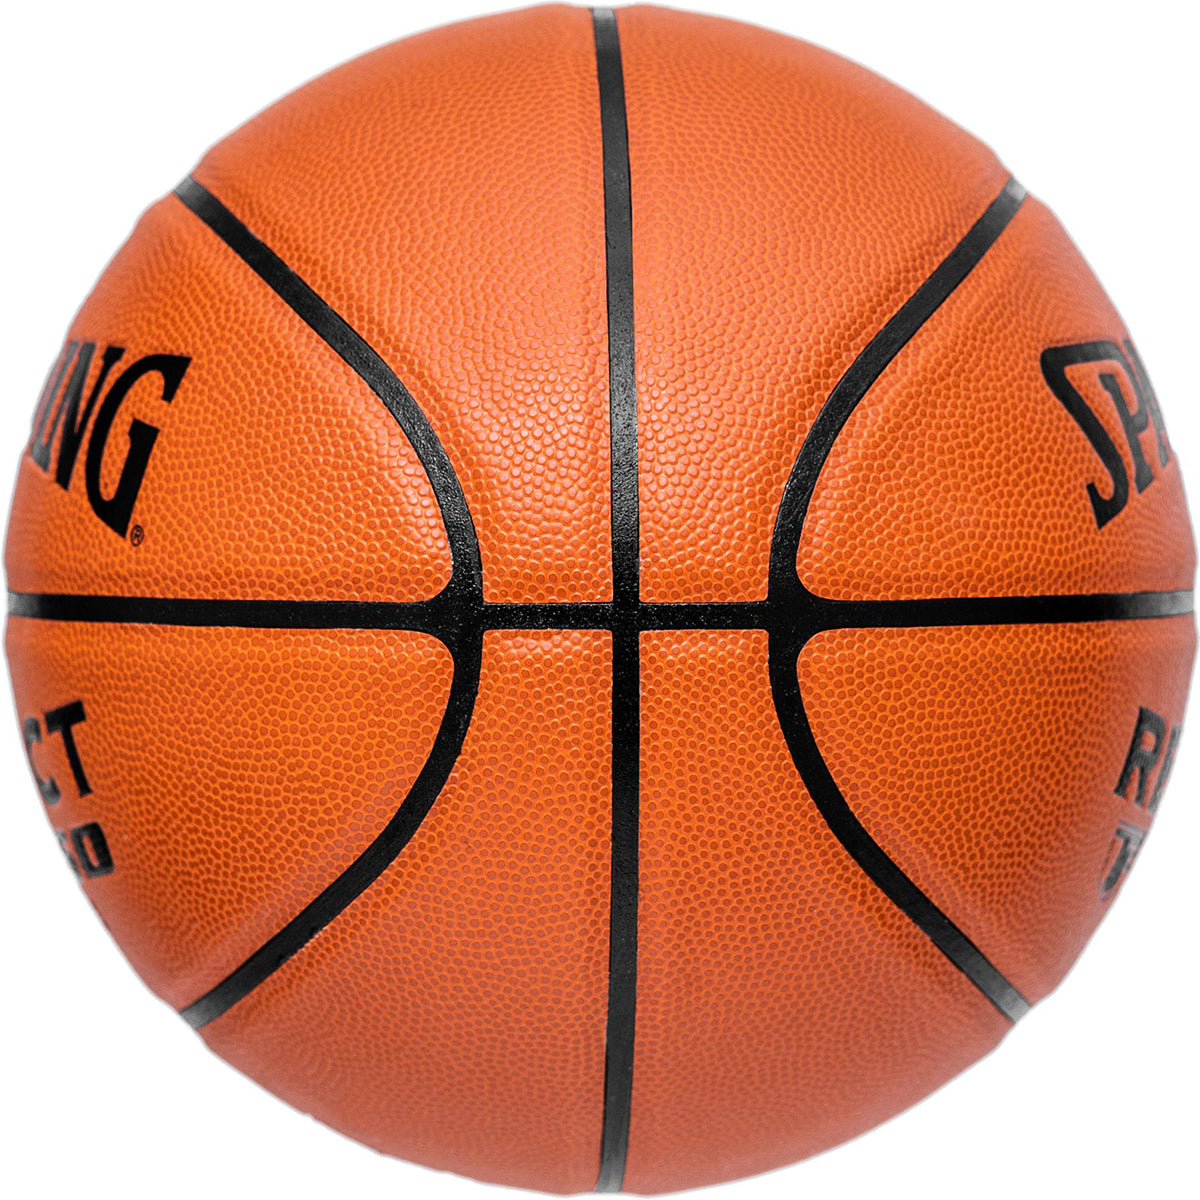 Spalding React TF-250 Indoor/Outdoor Basketball Spalding